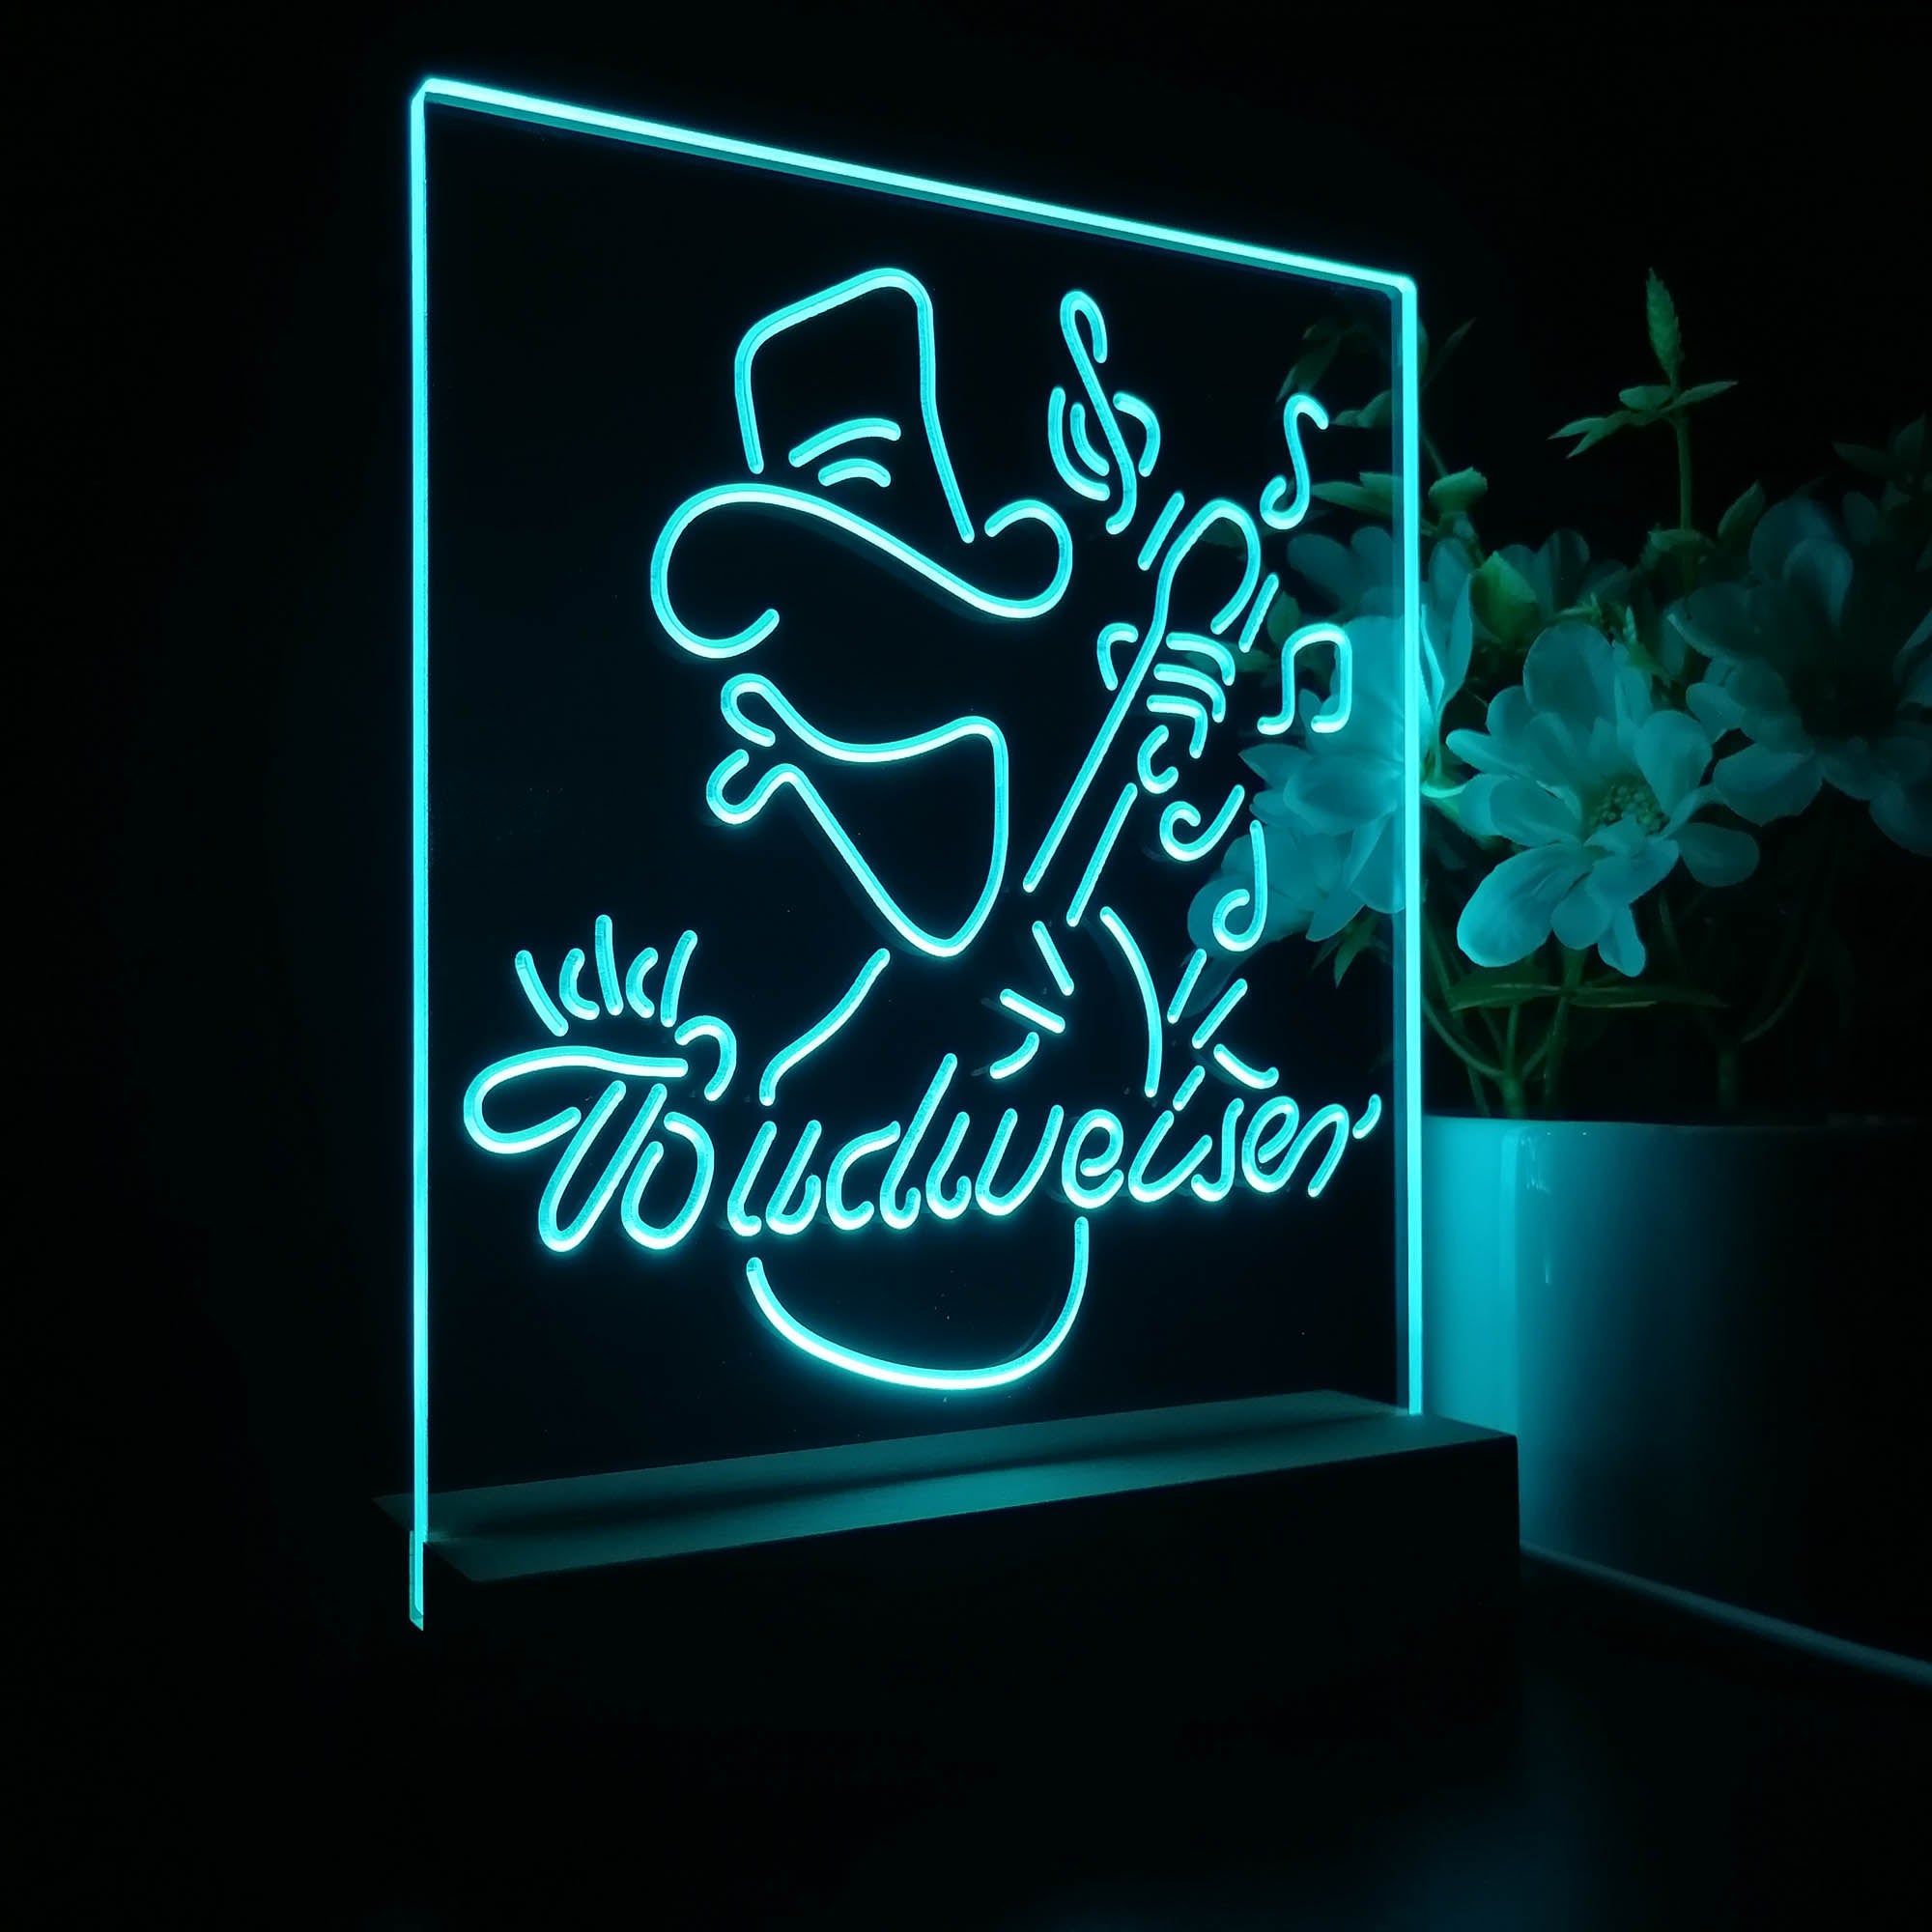 Budweiser Cowboy Play Guitar 3D LED Illusion Night Light Table Lamp